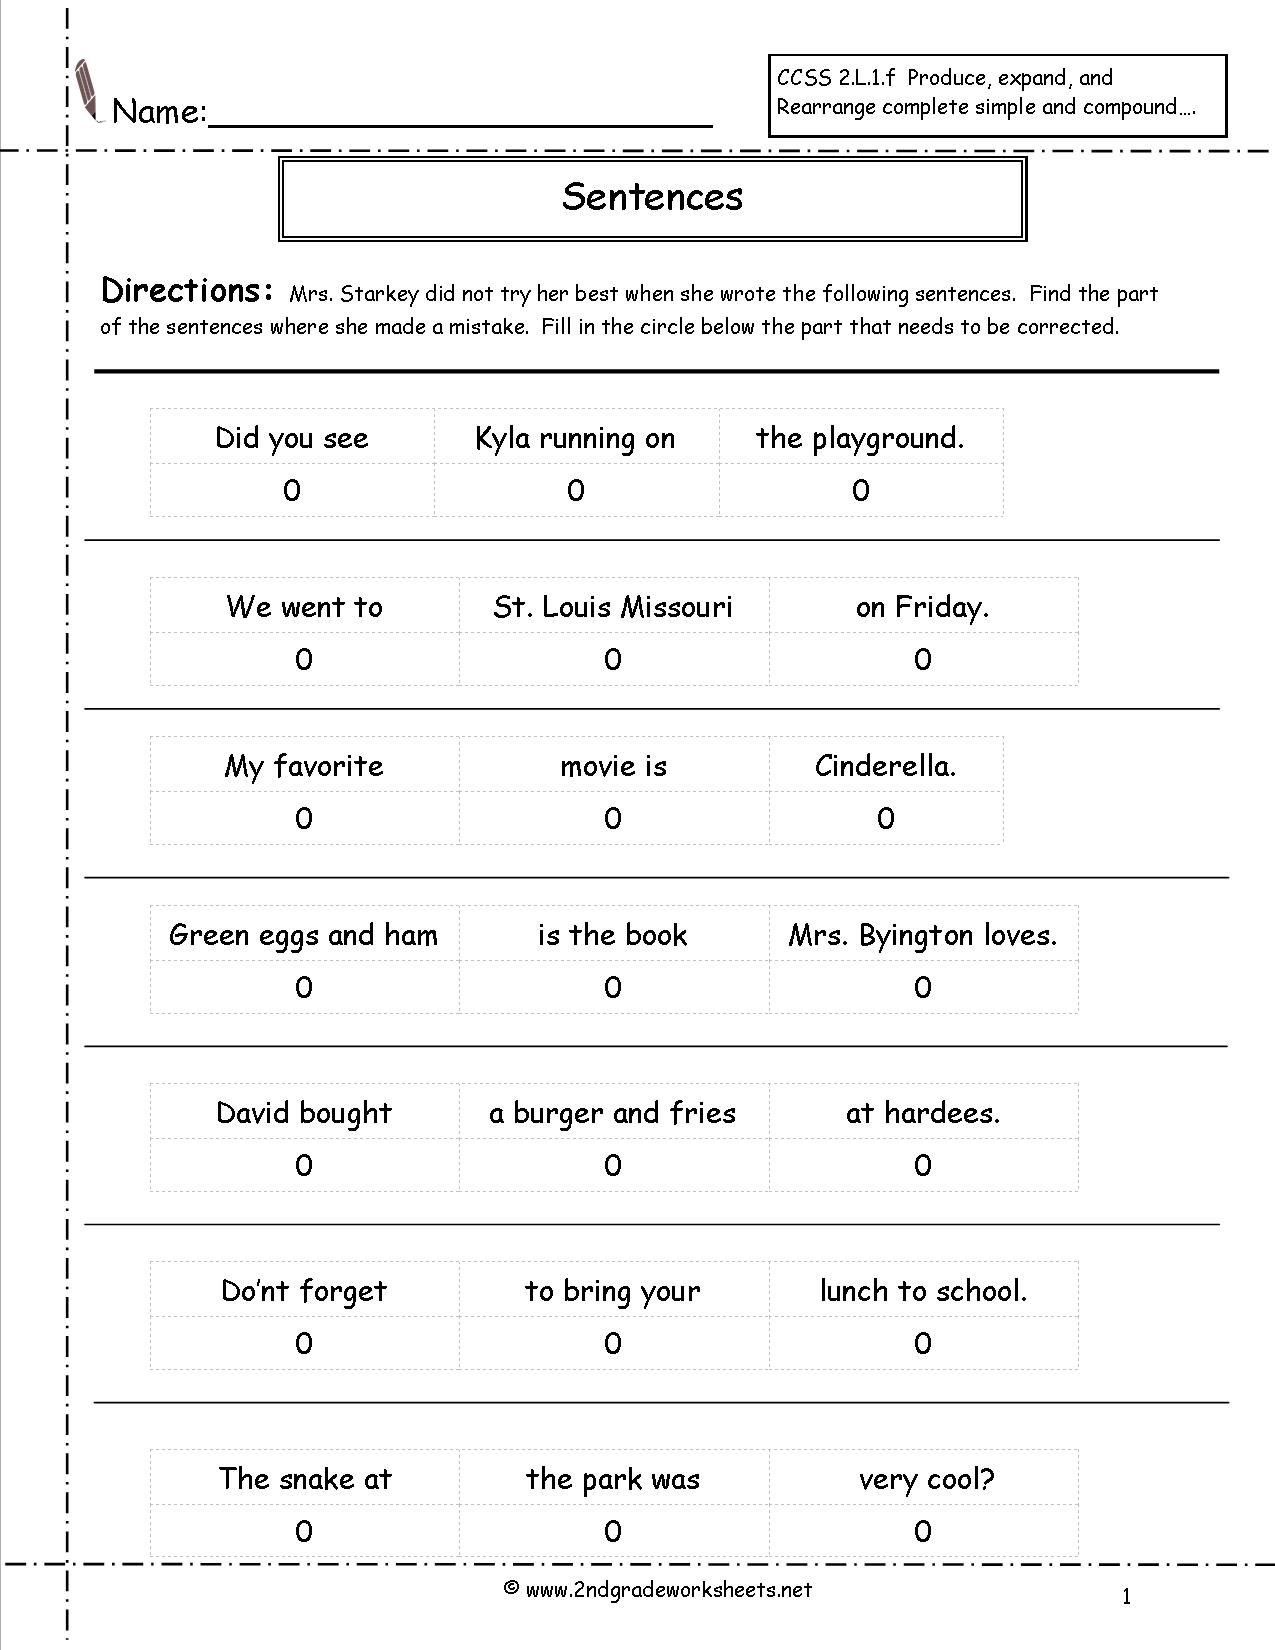 Correct Sentences Worksheet Image